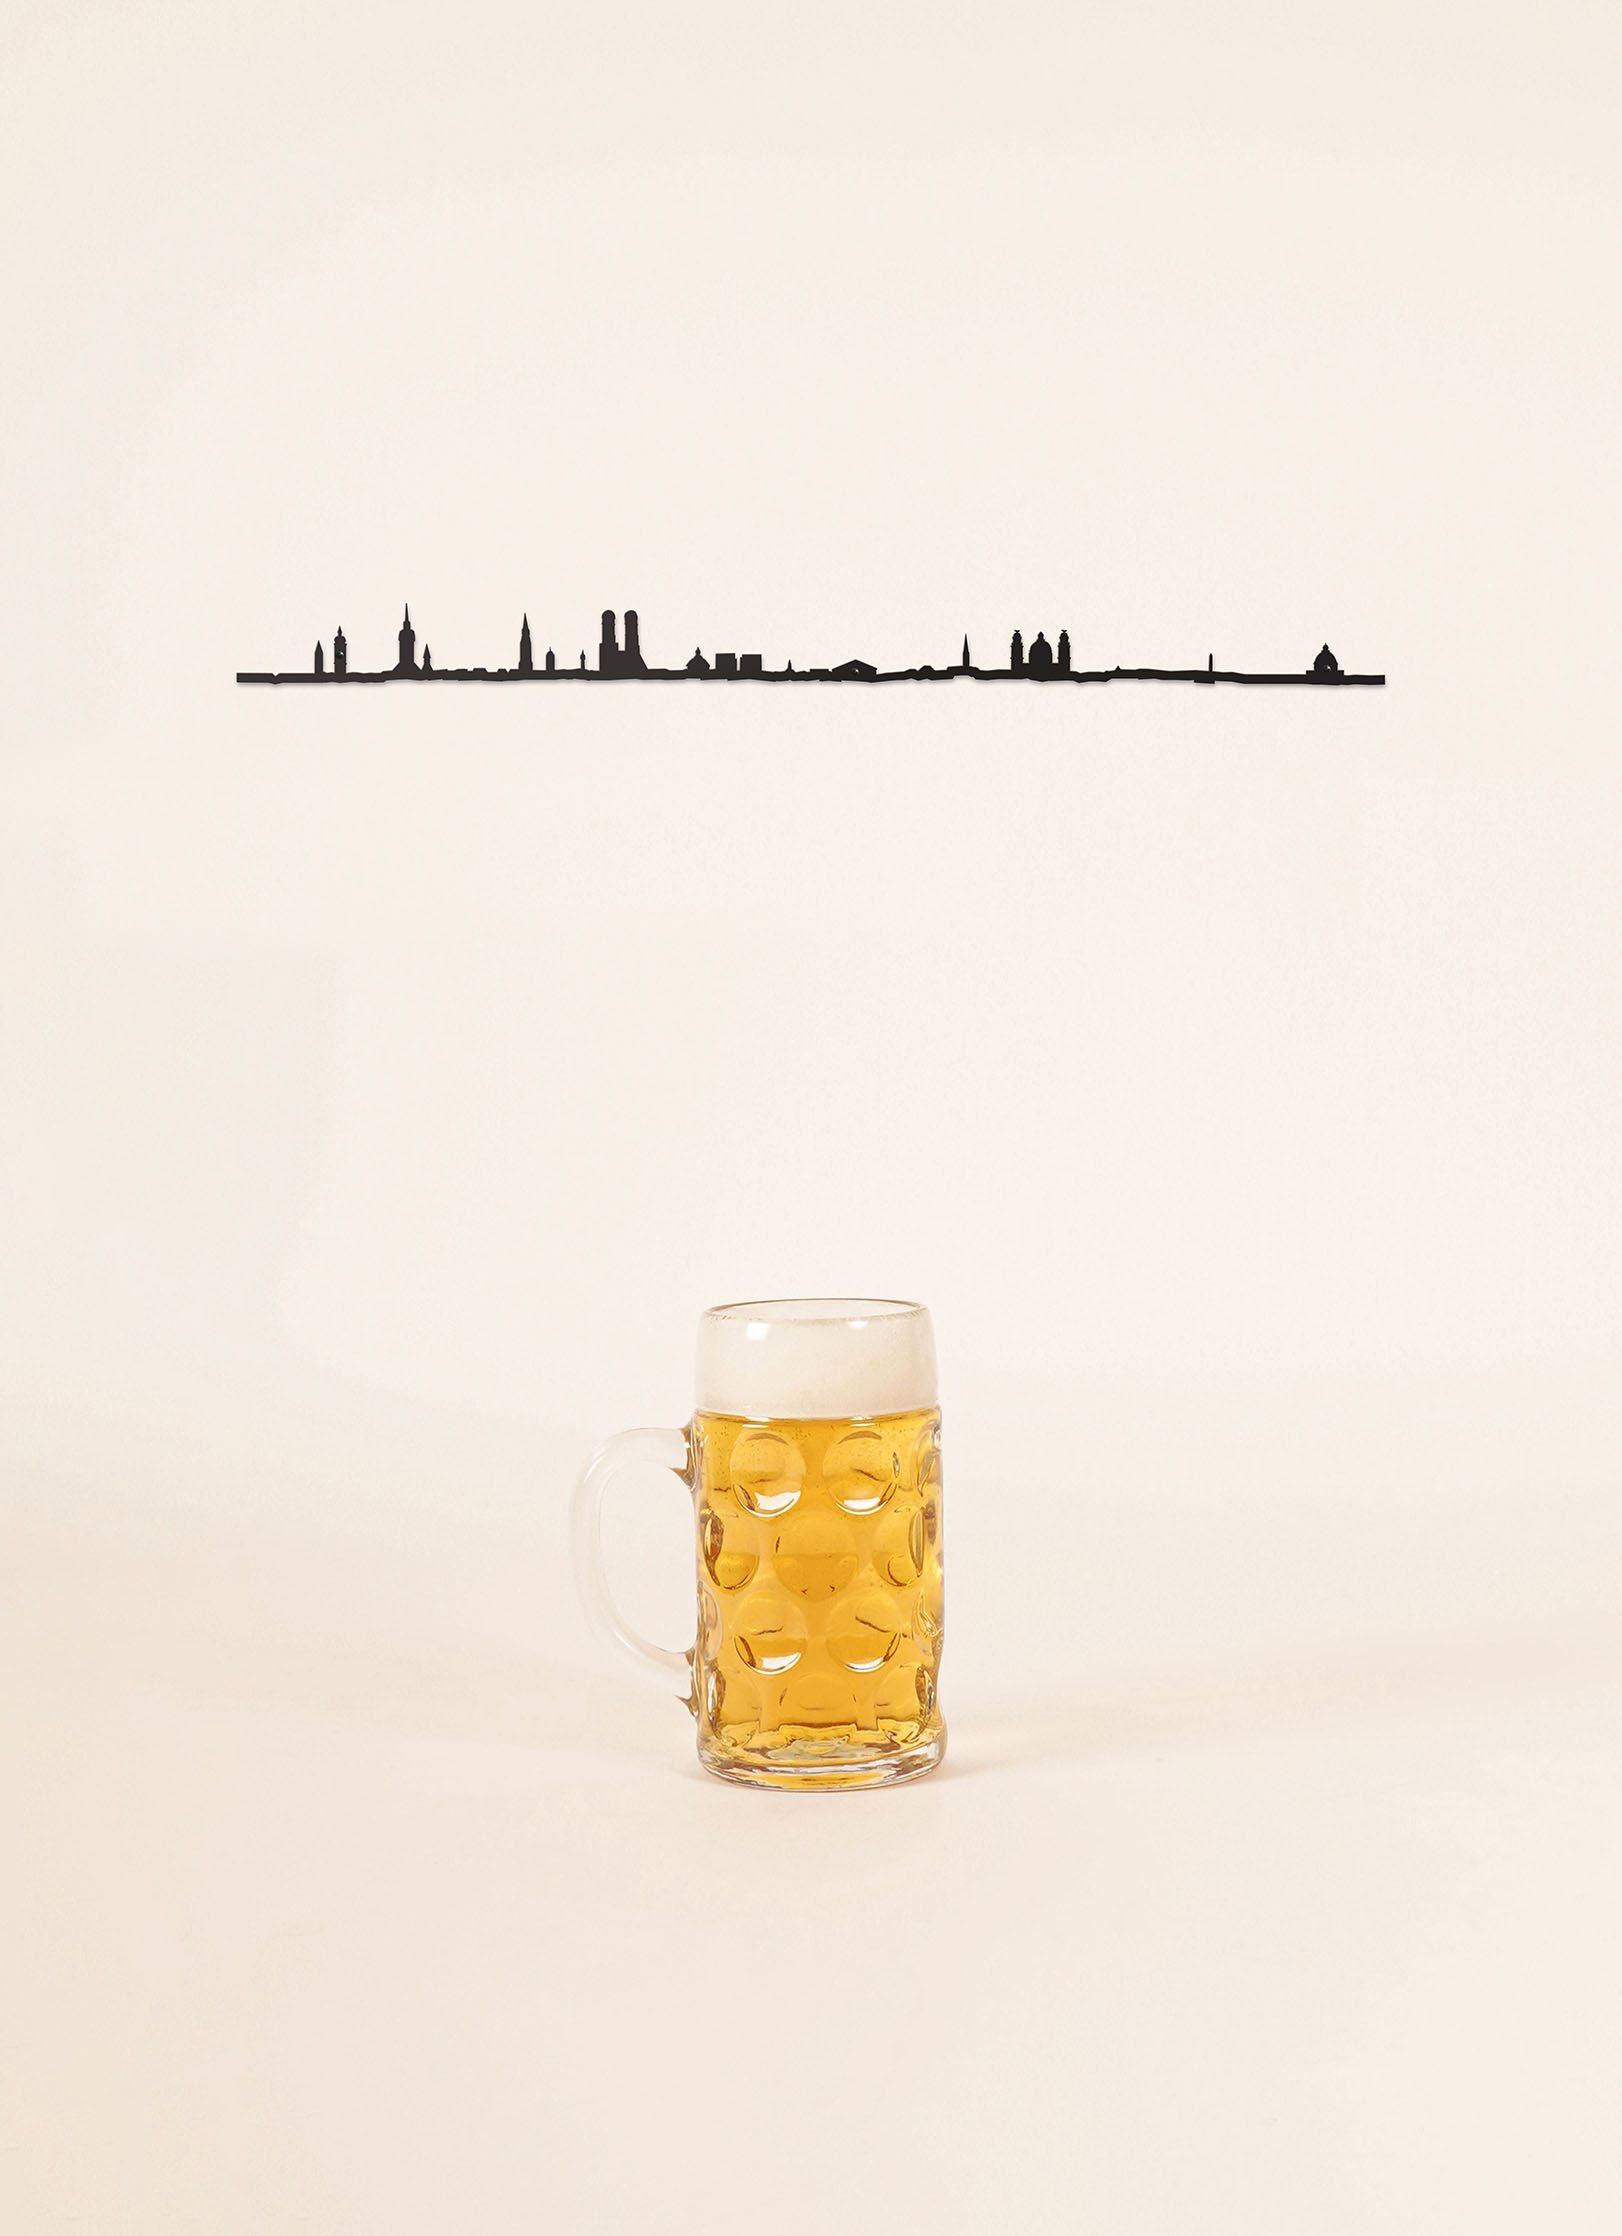 Cliché skyline de Munich